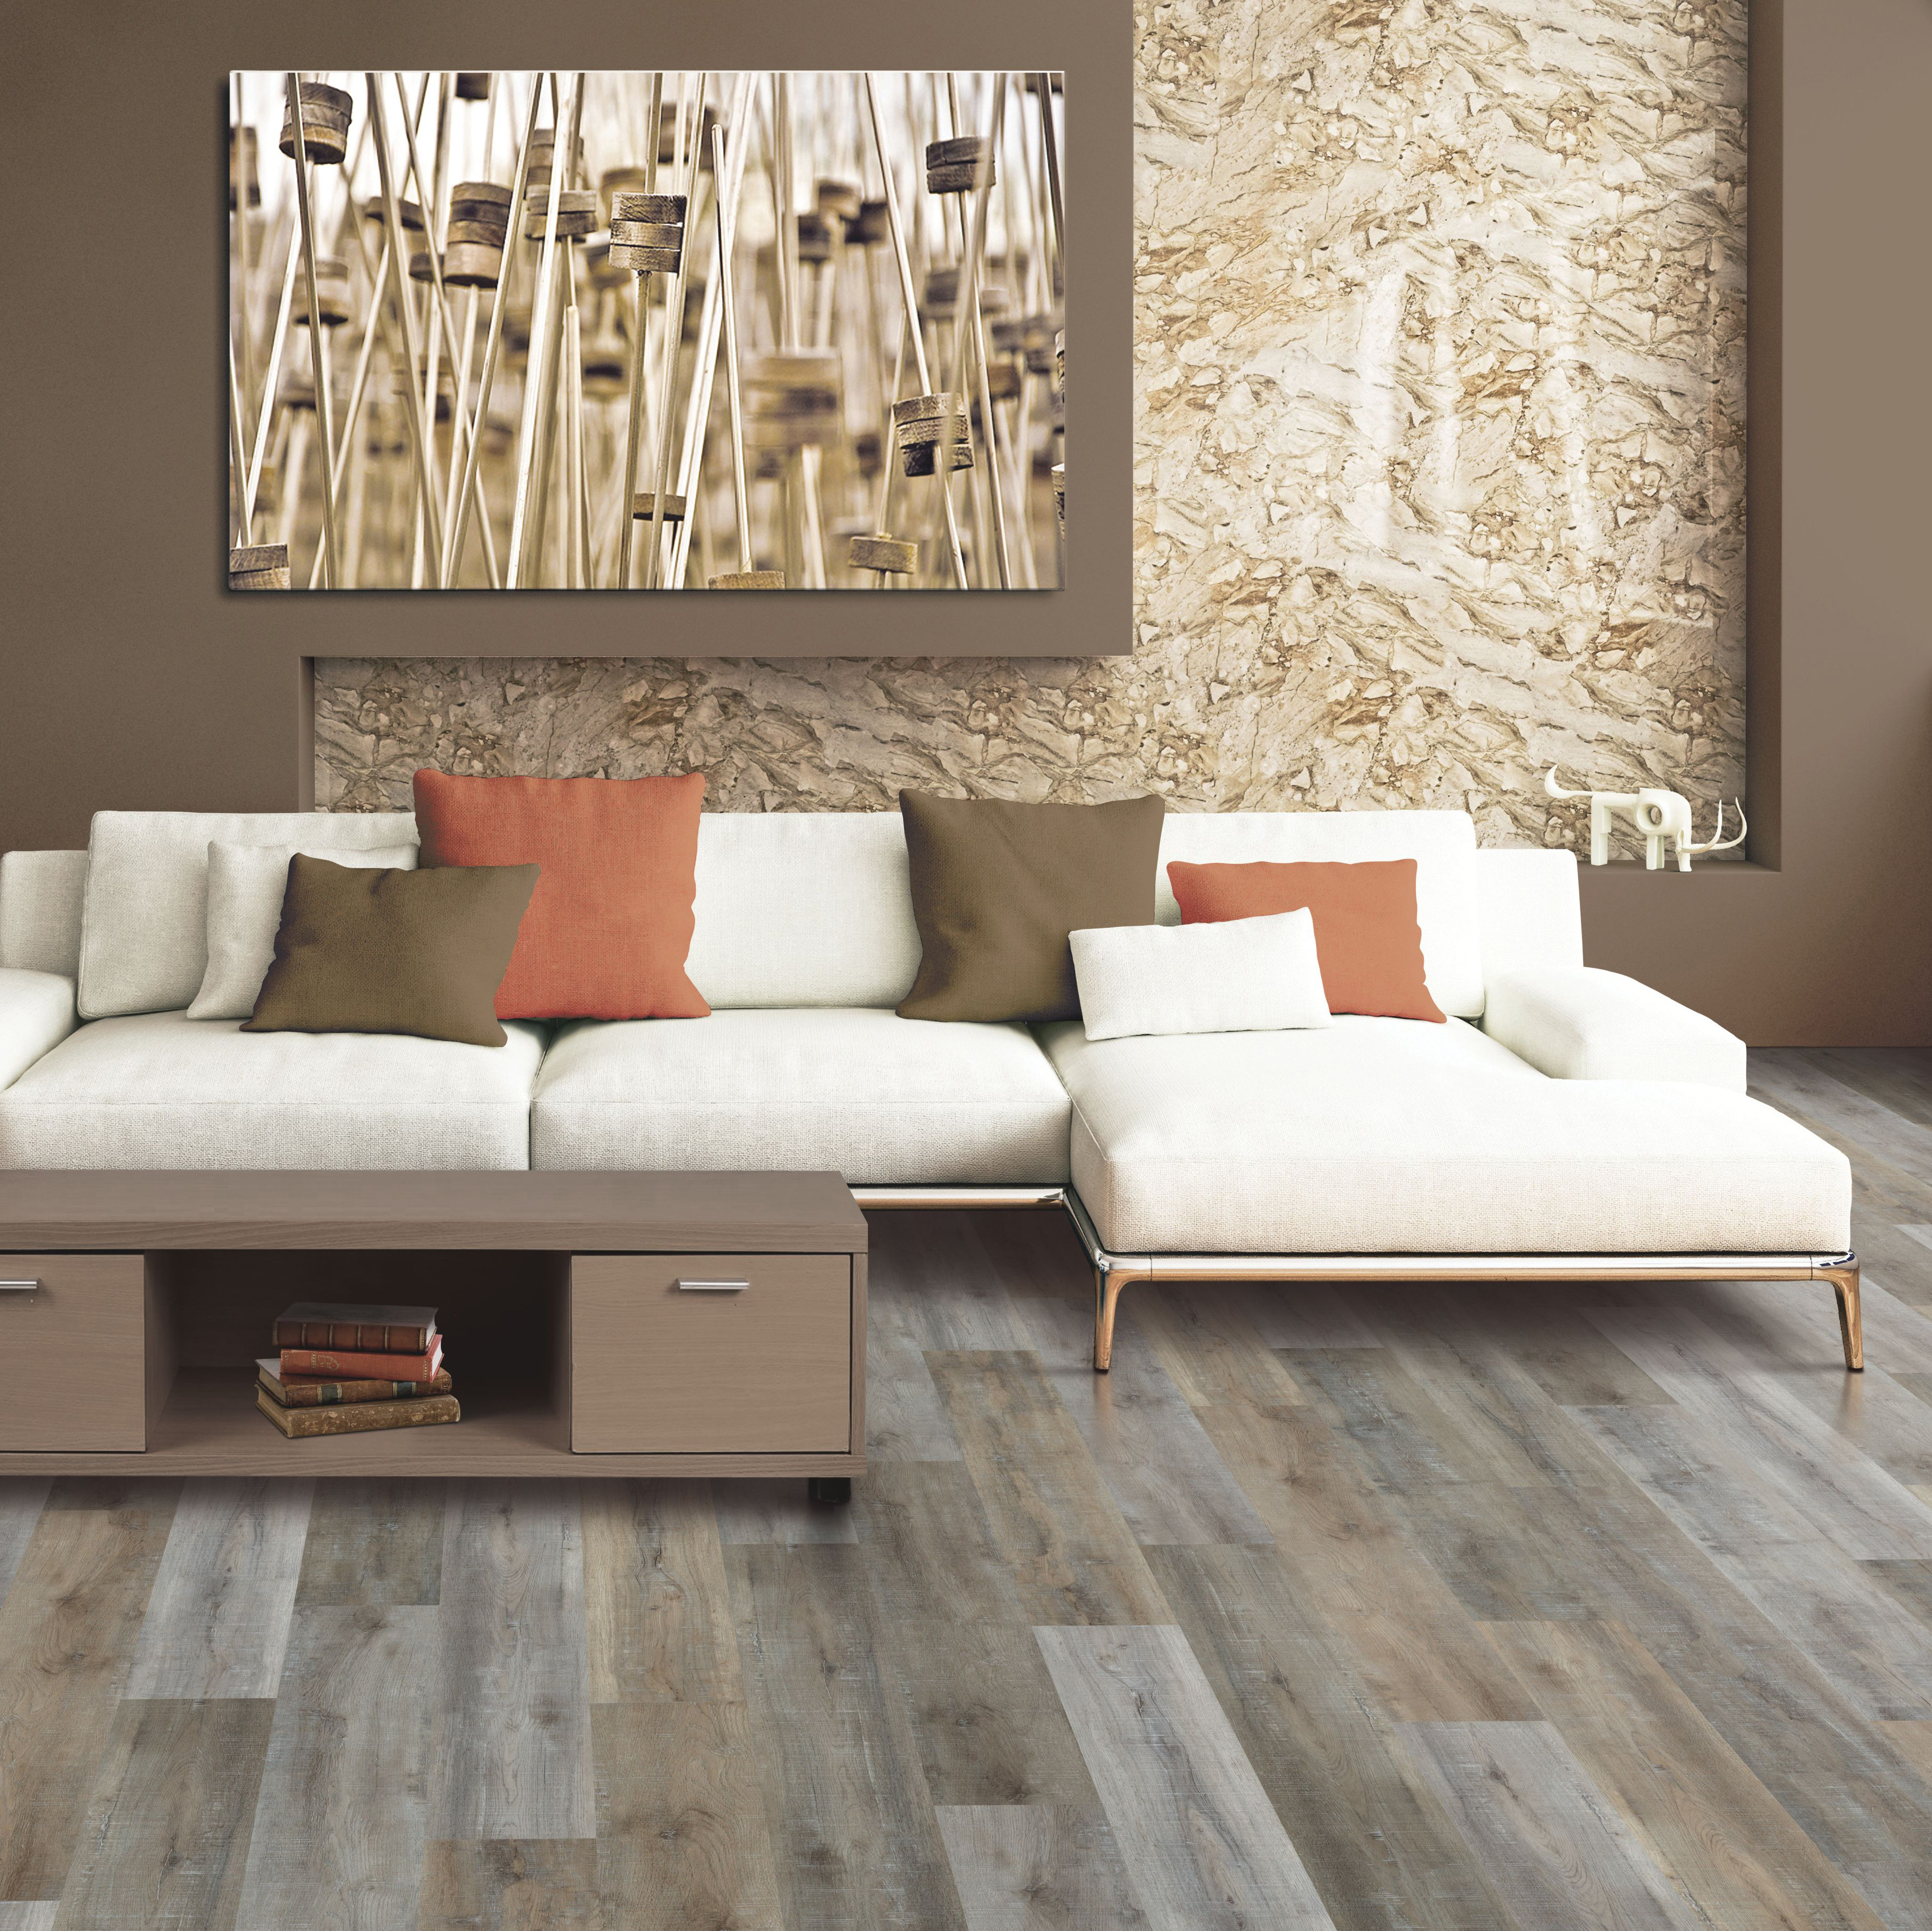 brooks hardwood floor refinishing pittsburgh pa of riterug flooringa carpet hardwood laminate columbus based with regard to style spotlight gray flooring